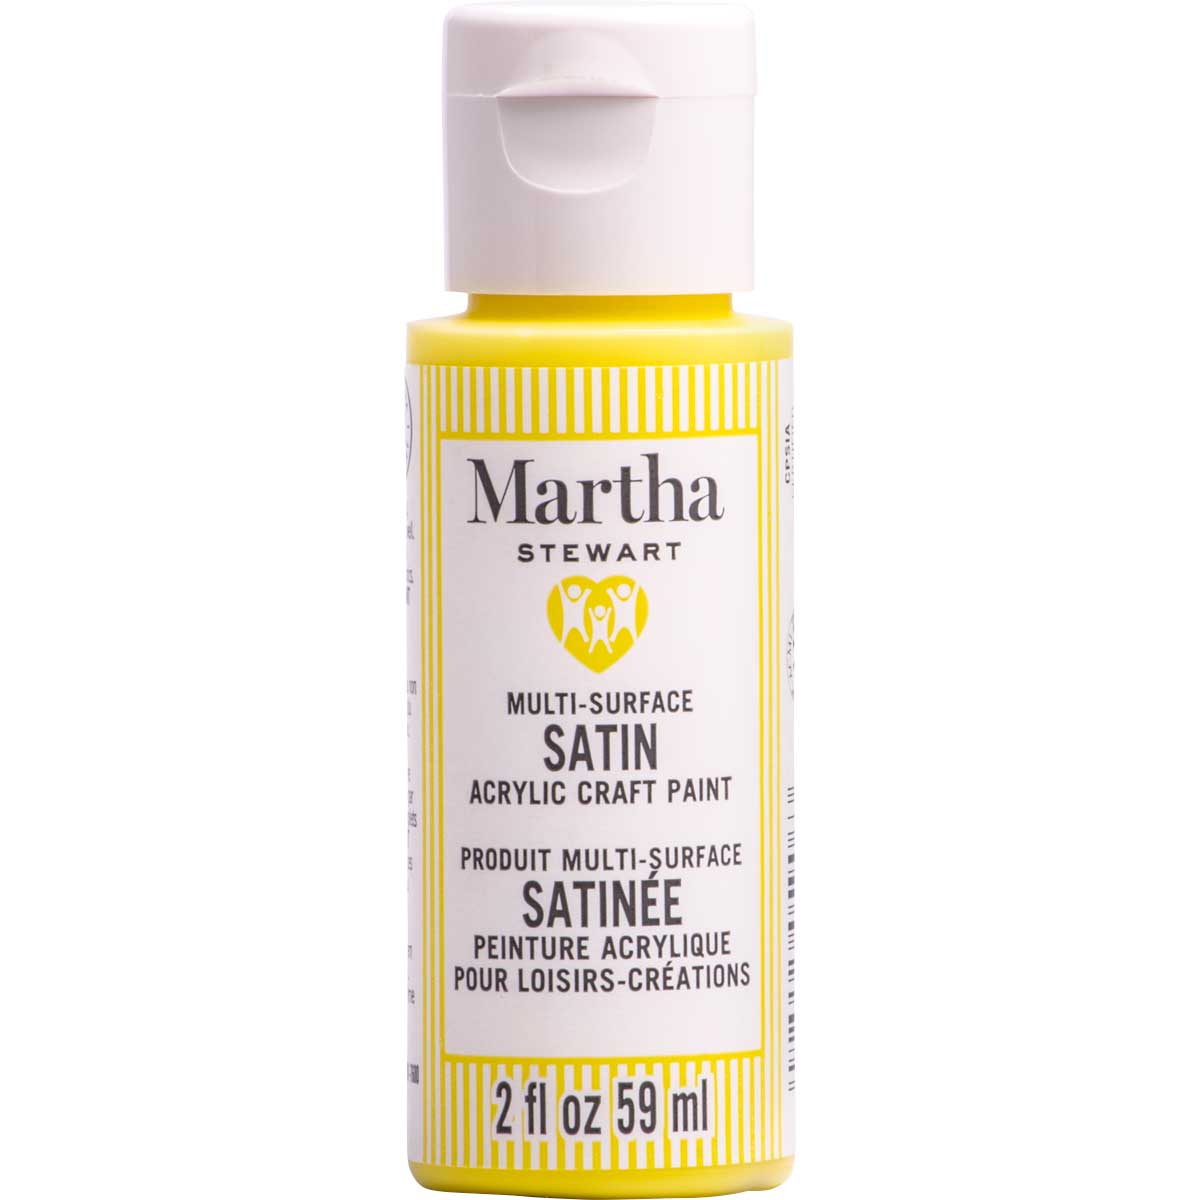 Martha Stewart ® Multi-Surface Satin Acrylic Craft Paint CPSIA - Sunshine Yellow, 2 oz. - 5906